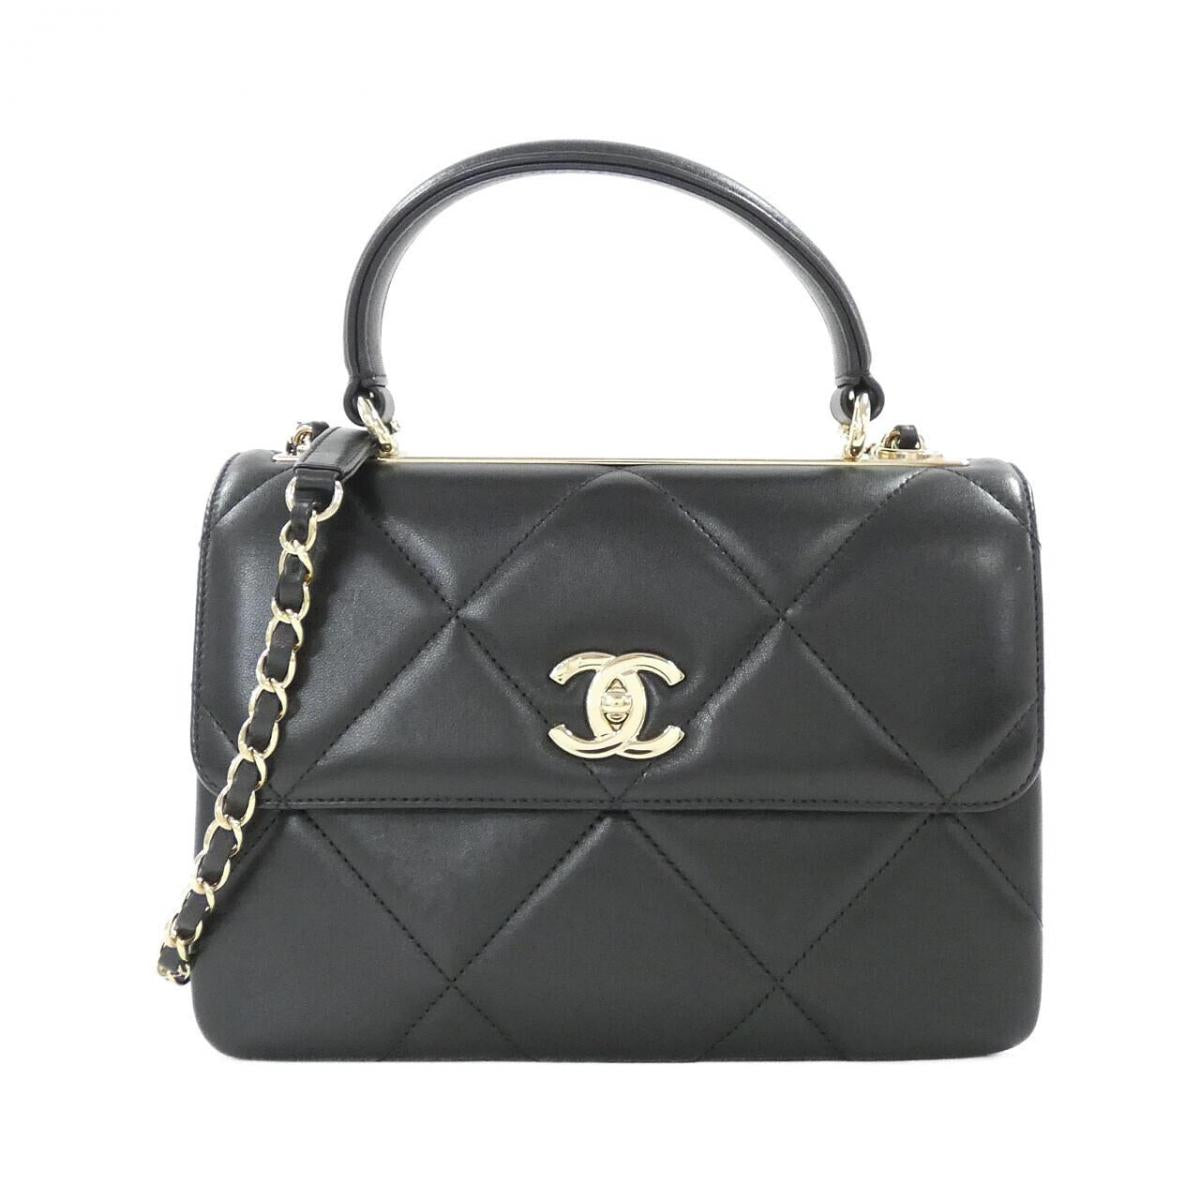 ♦️New Arrival♦️ Chanel Medium Trendy CC Flap Bag-Black Leather